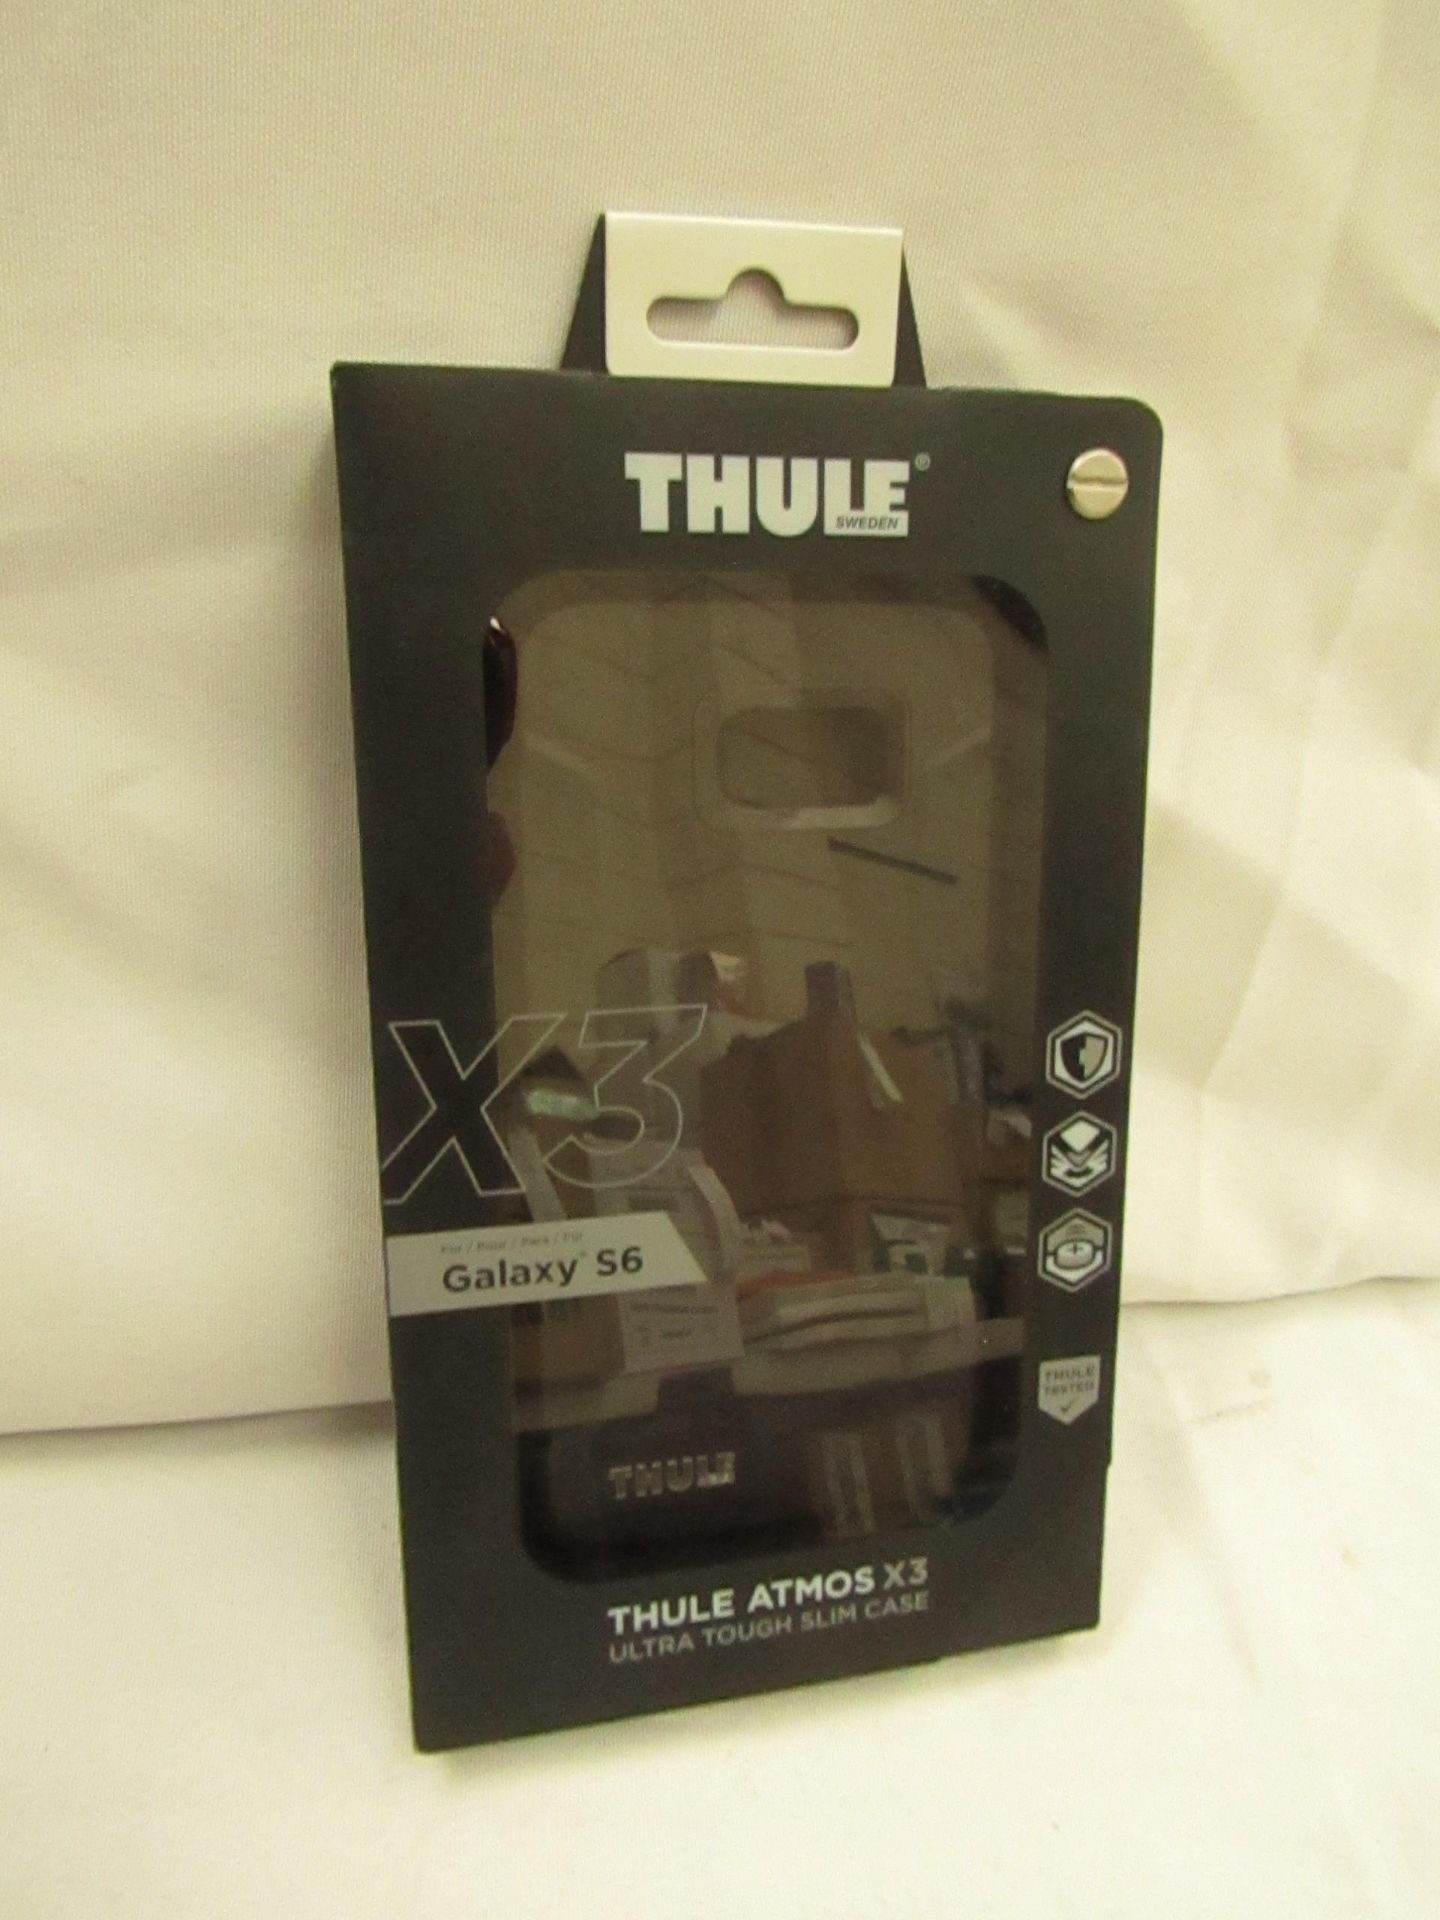 6x Thule - Atmos X3 Ultra Tough Slim Case ( Samsung Galaxy S6 ) - Unused & Boxed.